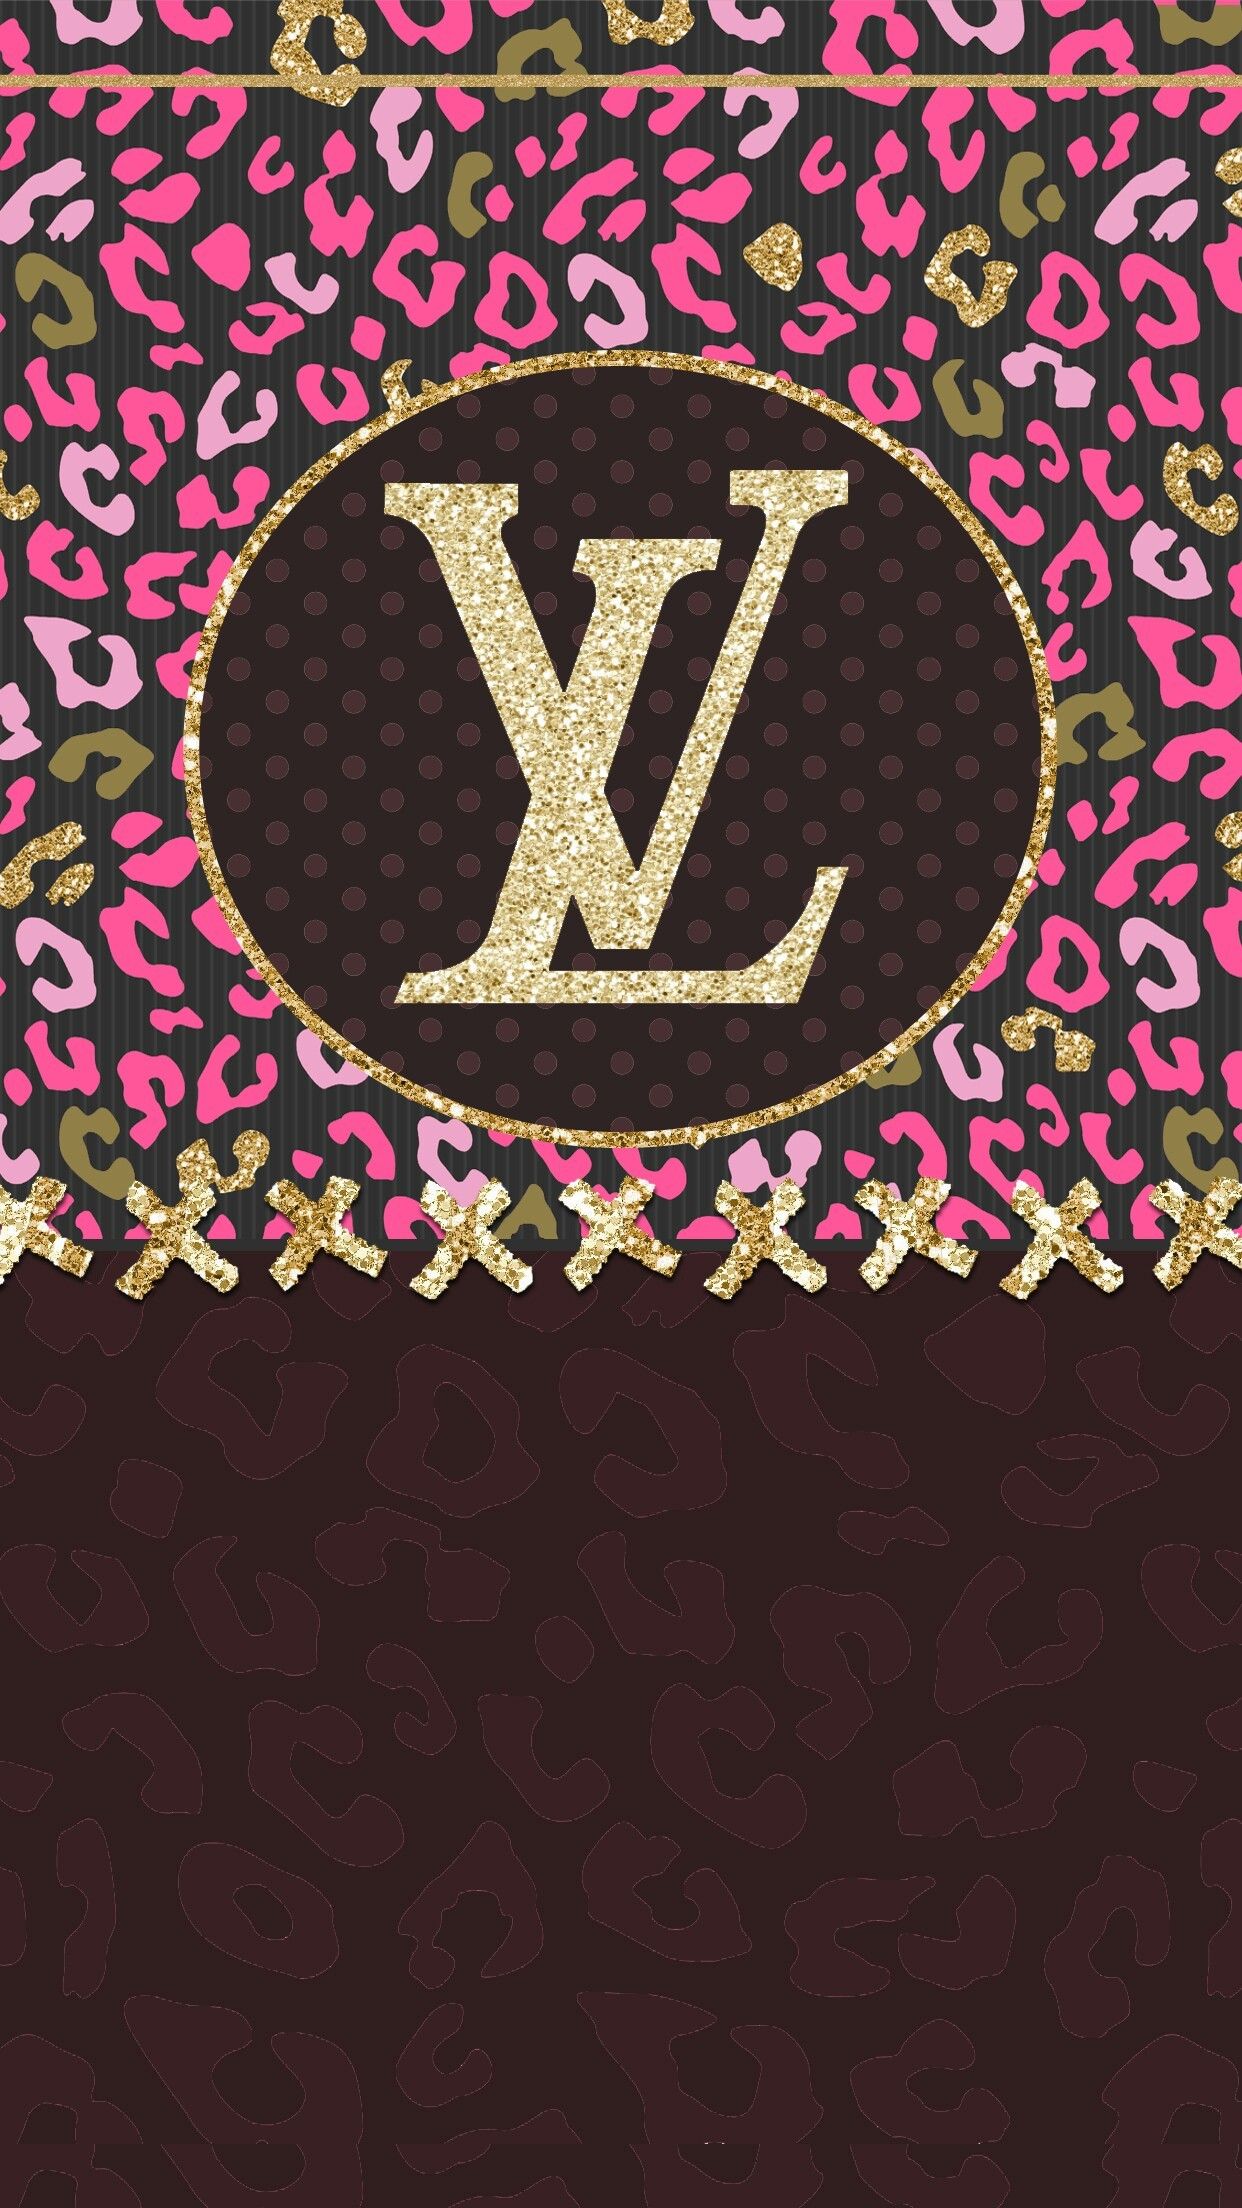 Download Rose Louis Vuitton Phone Wallpaper